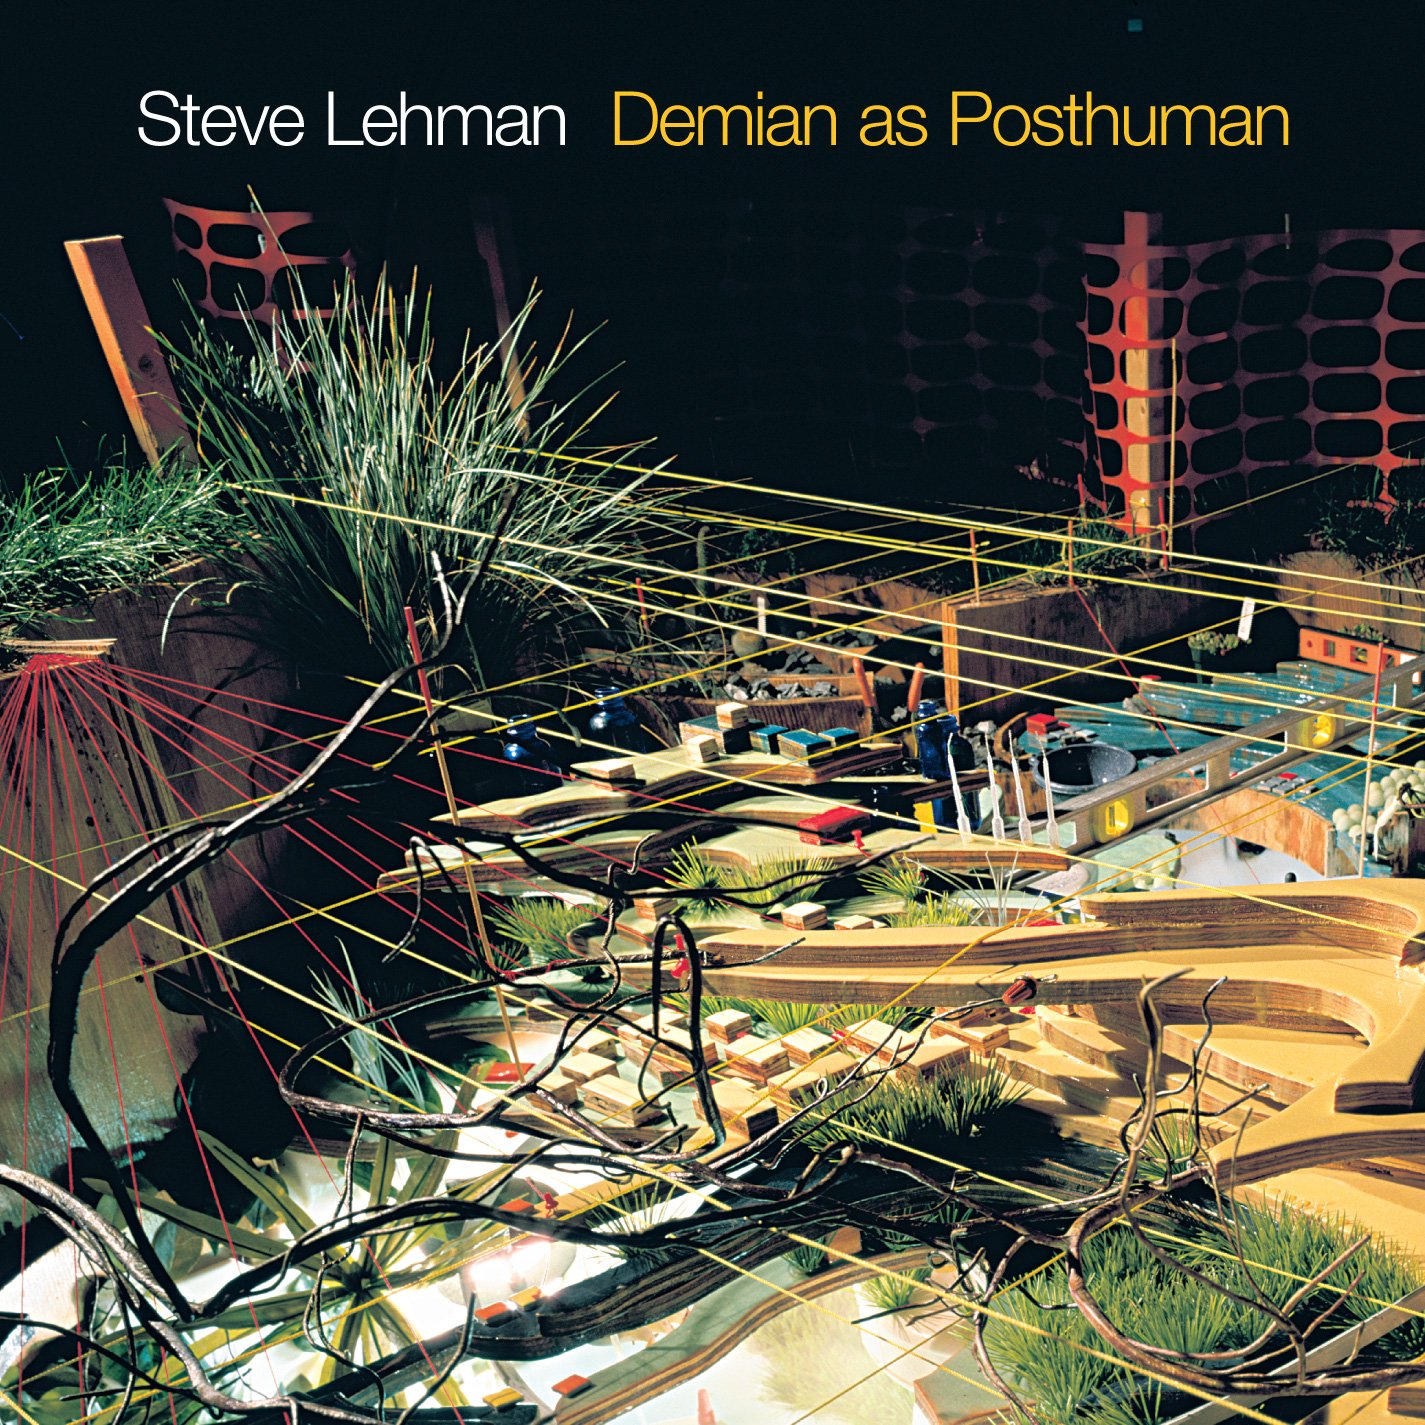 Demian as Posthuman - Steve Lehman